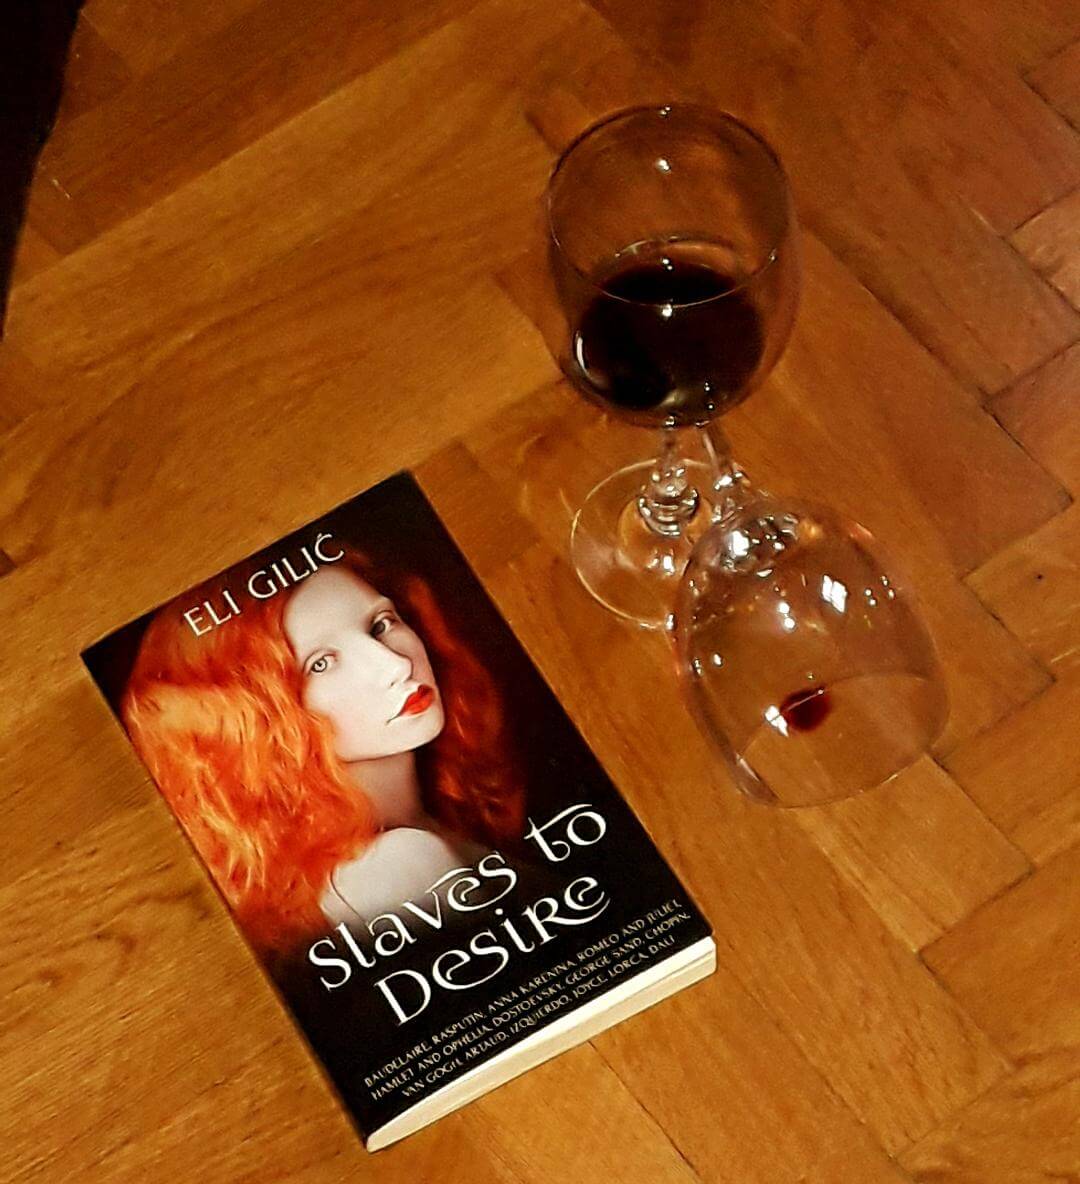 Slaves to Desire wine